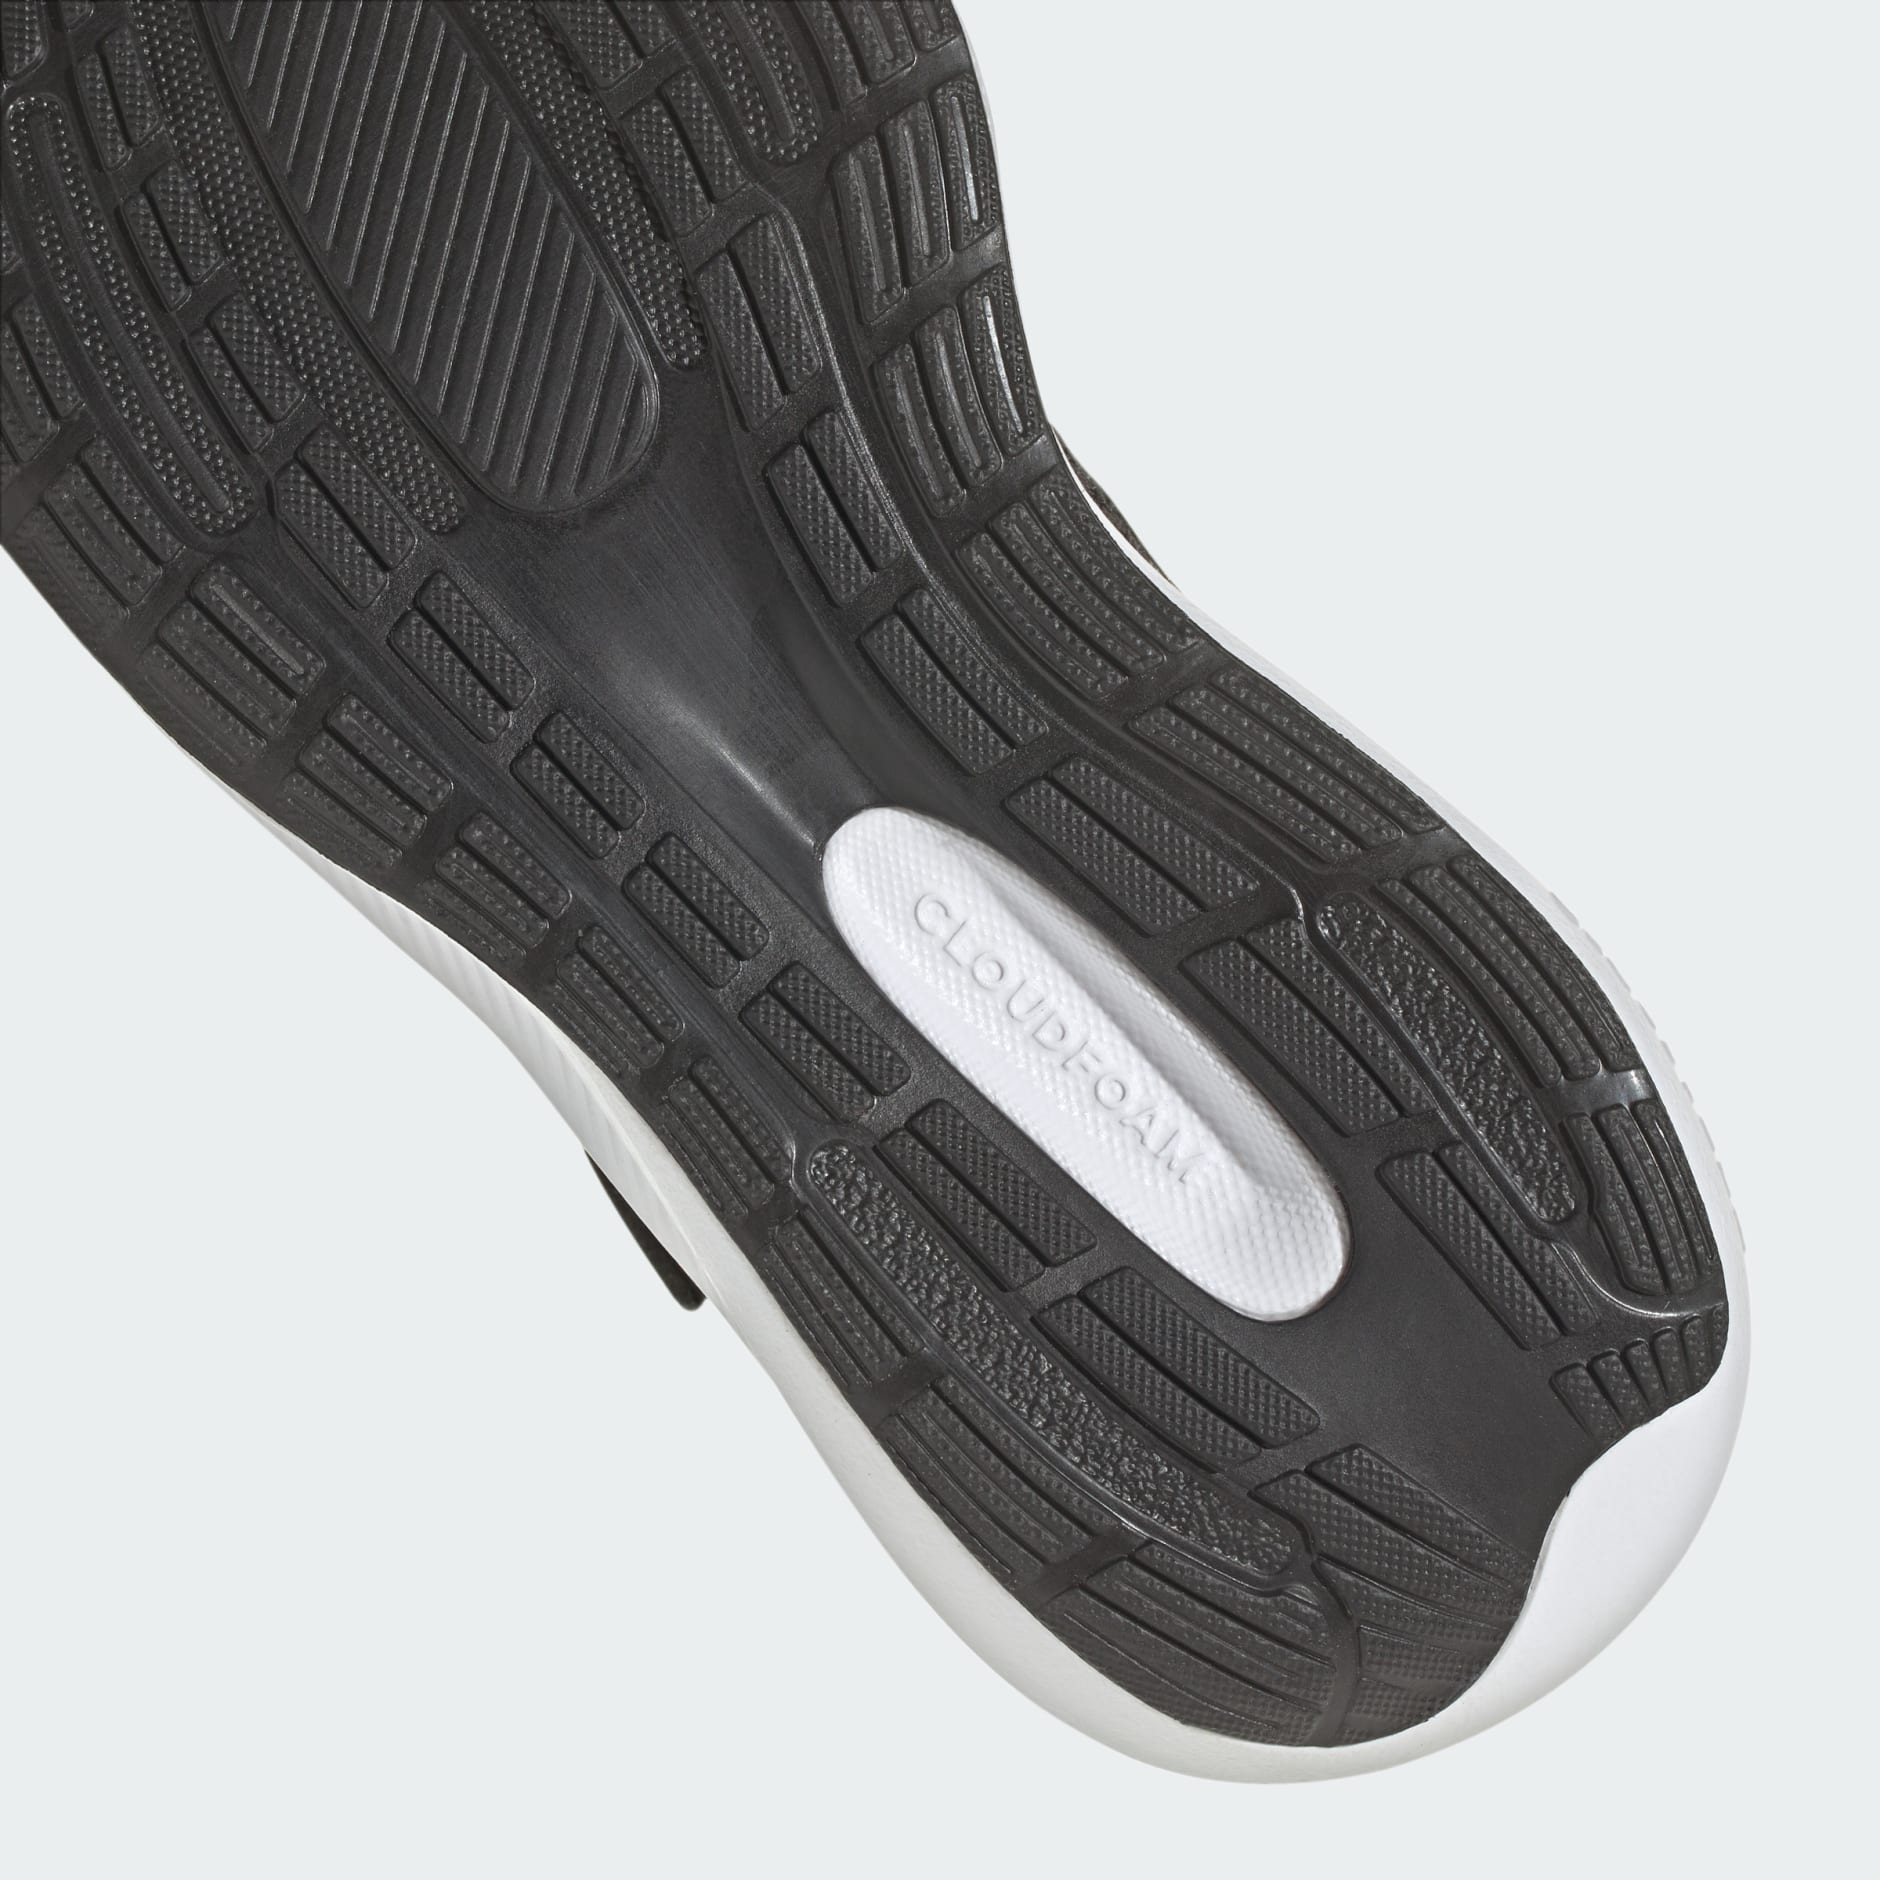 Shoes 3.0 | Black adidas Elastic - Strap KE Top adidas RunFalcon Lace